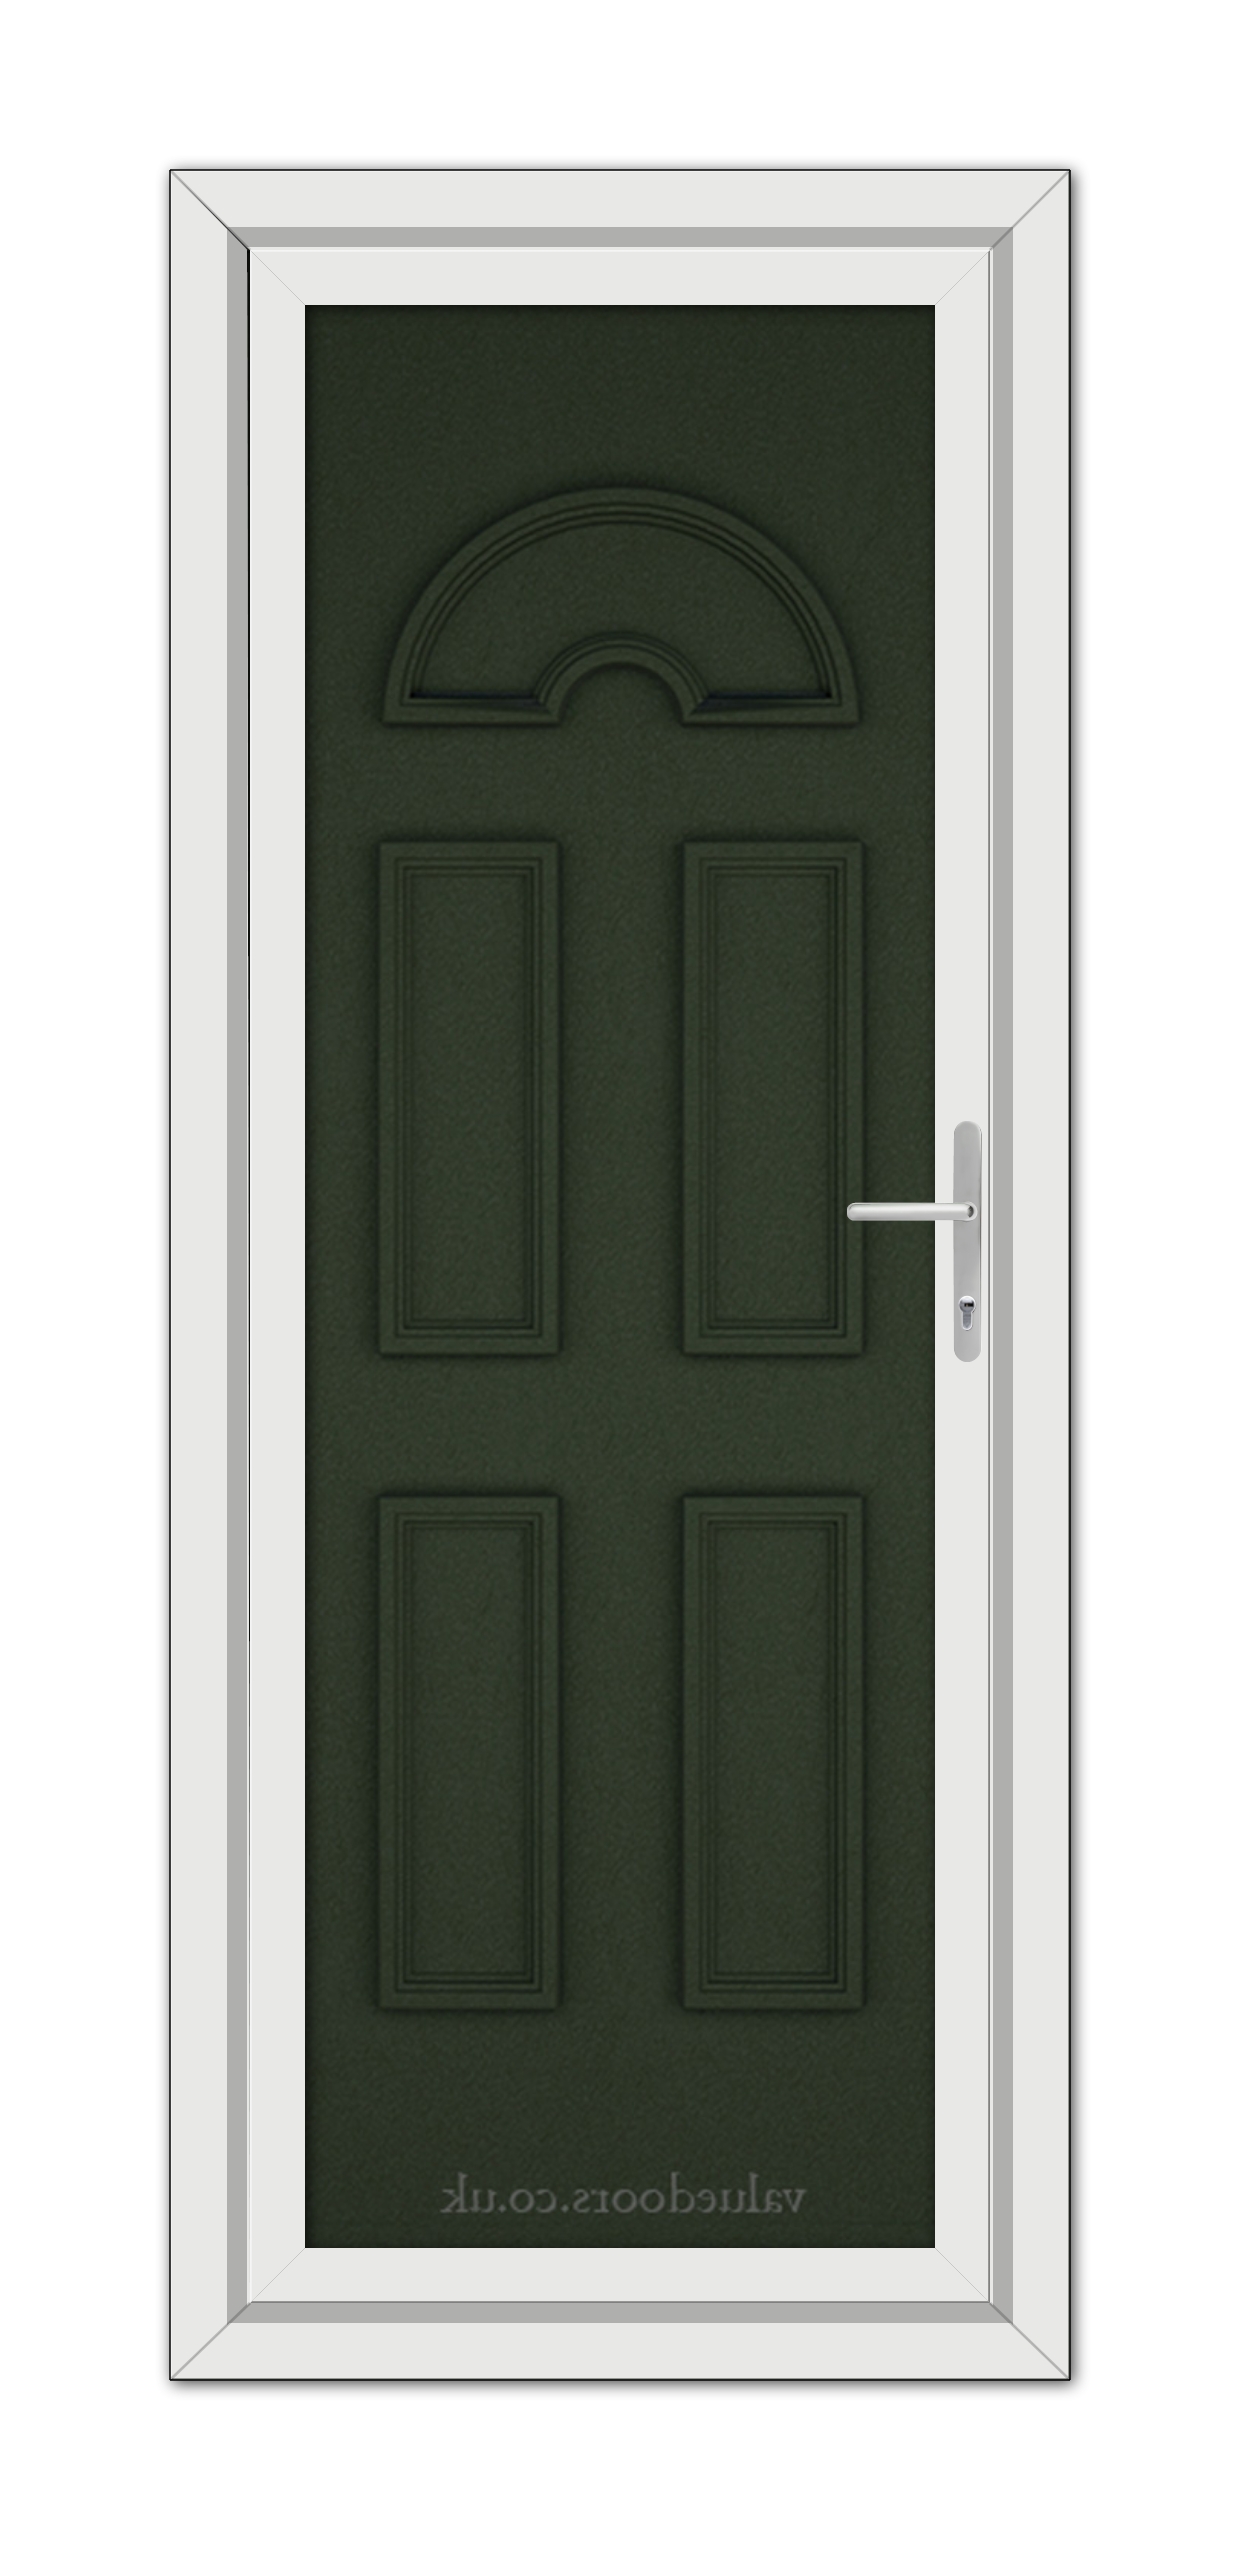 A close-up of a Green Sandringham Solid uPVC Door.